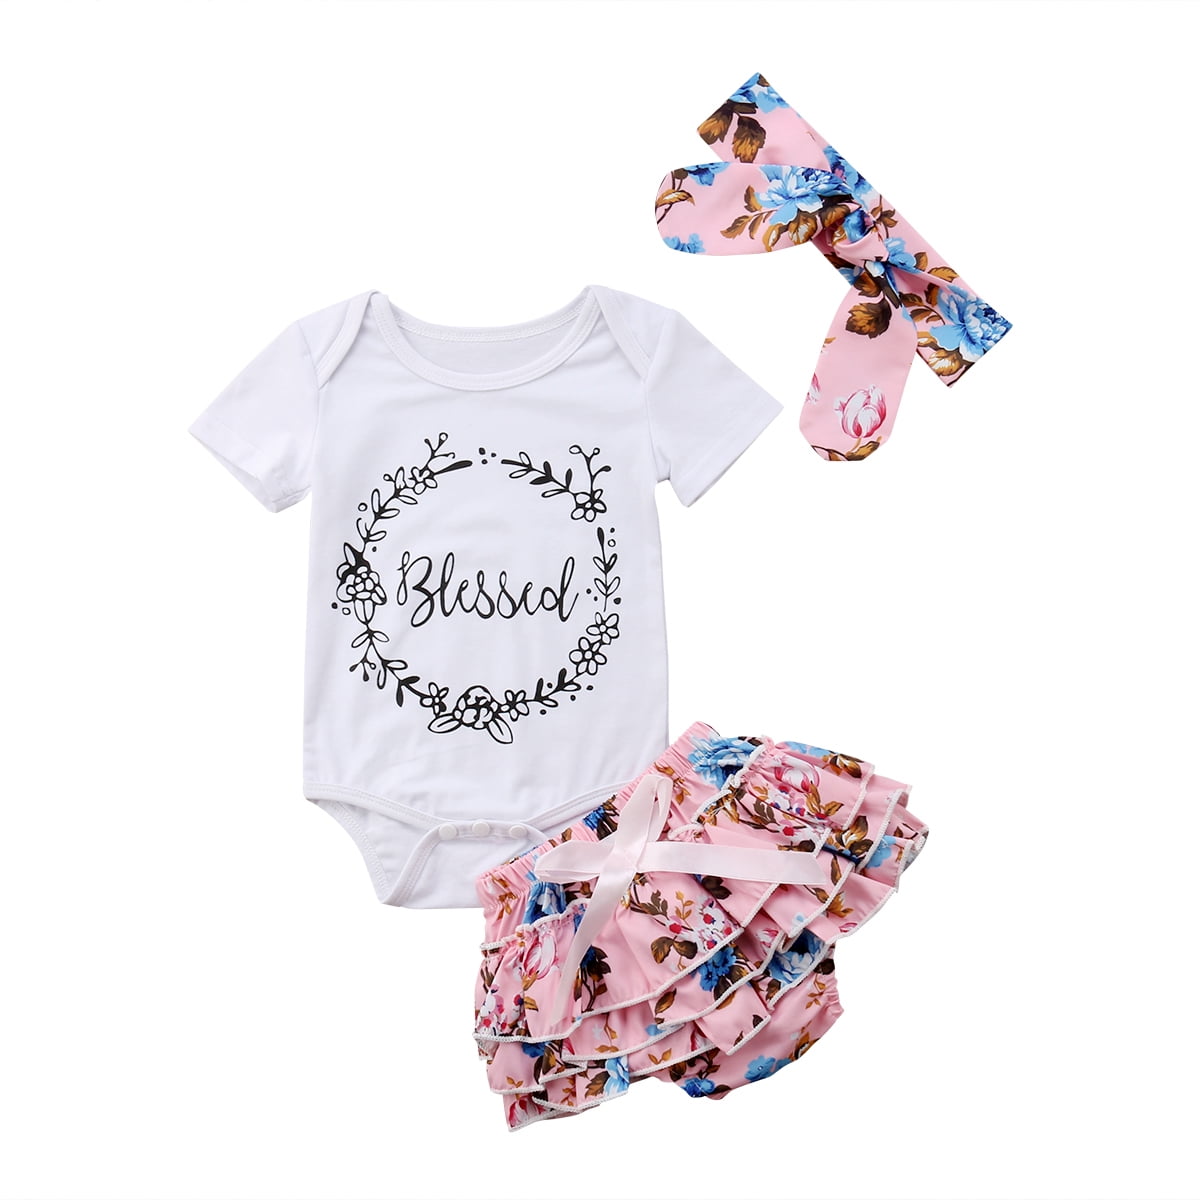 Details about   3PCS Cute Newborn Baby Girl Outfits Clothes Tops Romper+Tutu Shorts Pants Set 